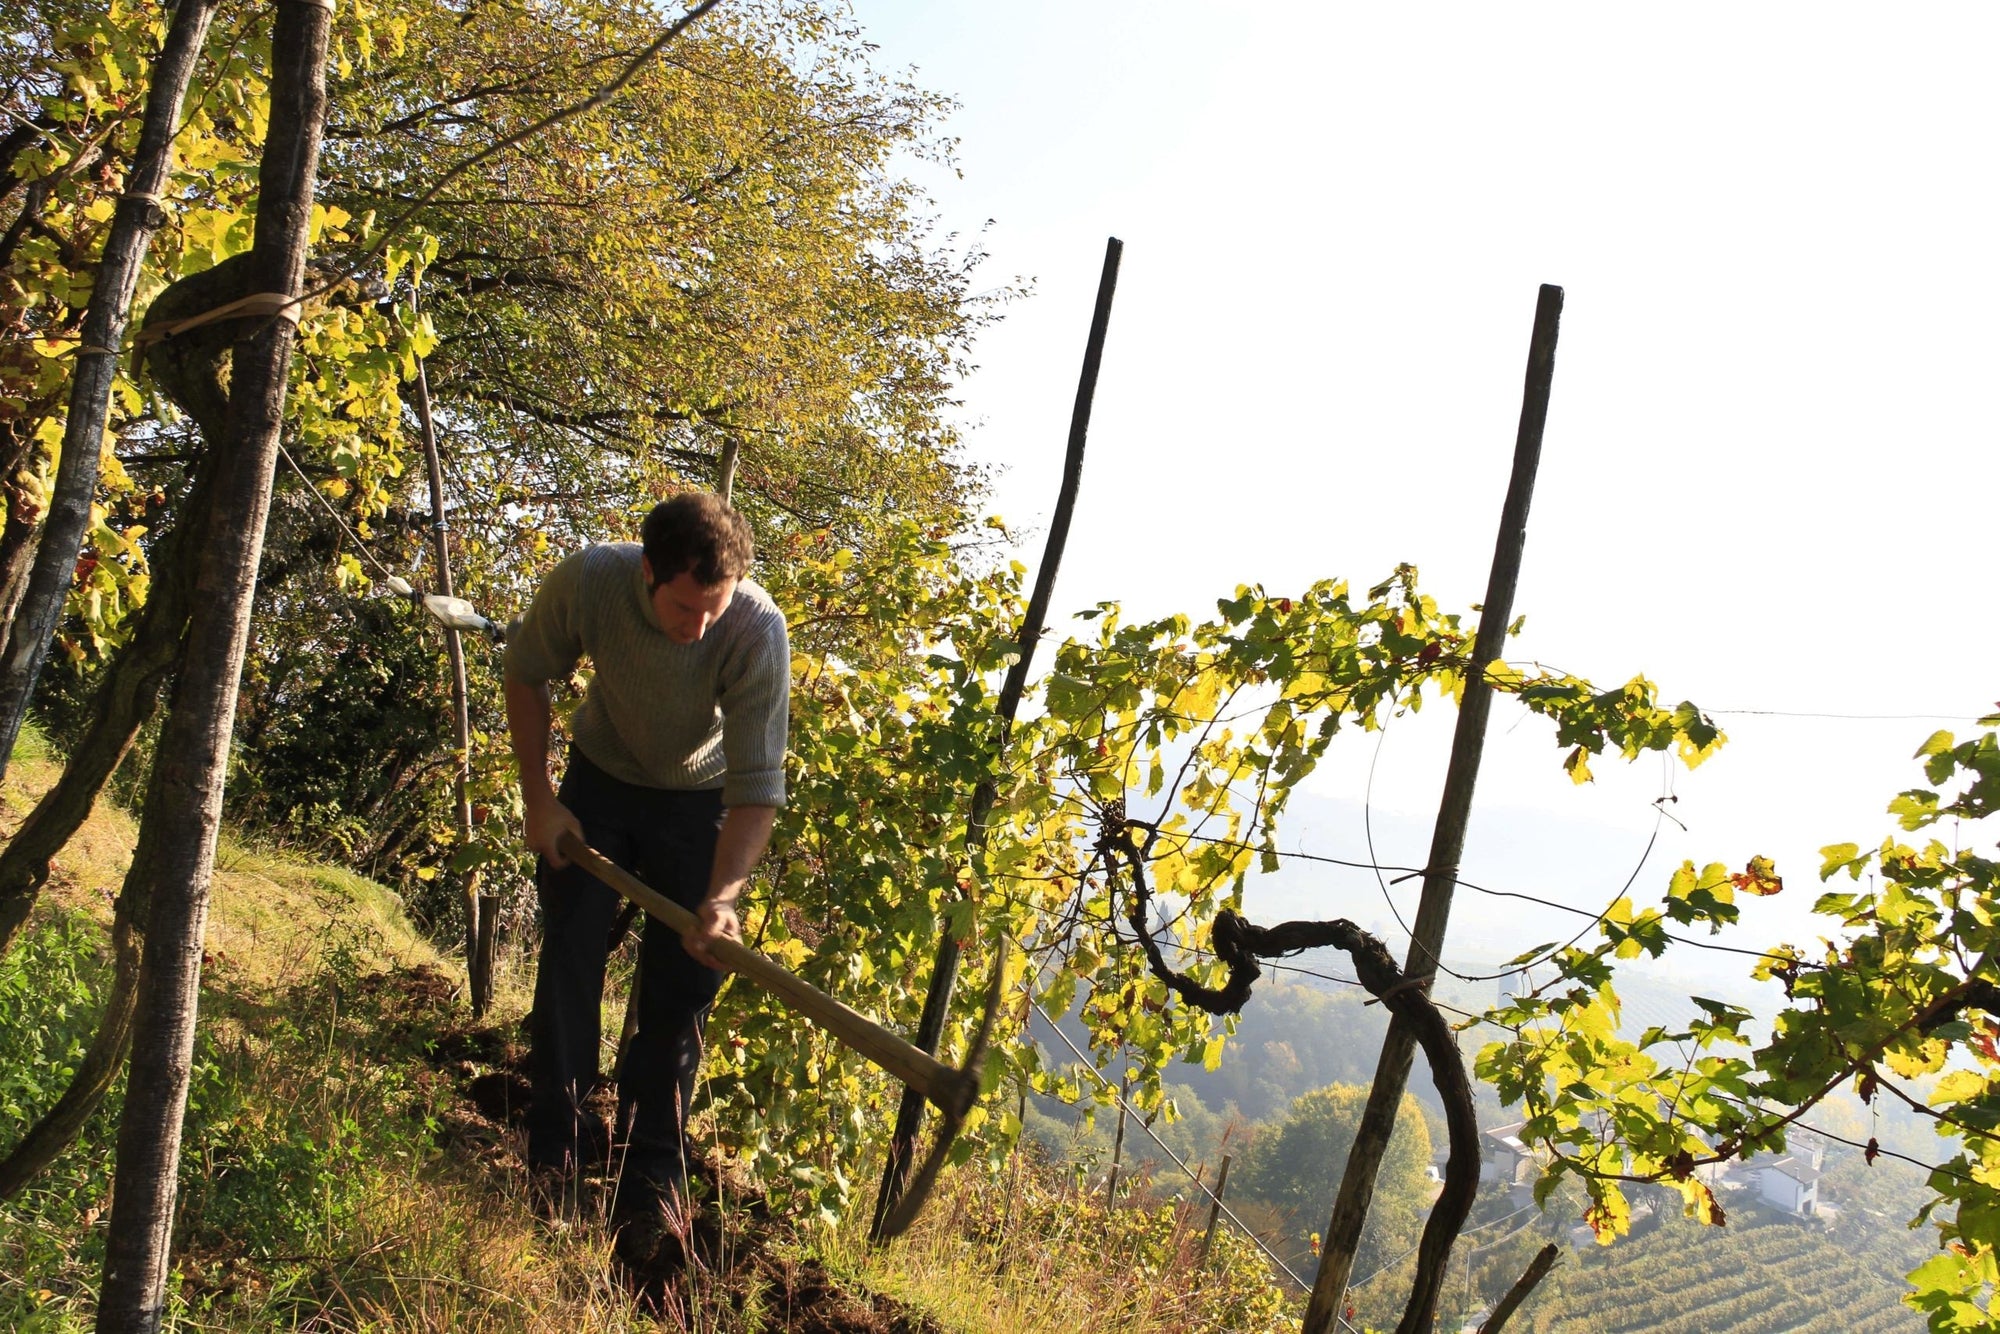 Christian Zago working in the vineyard